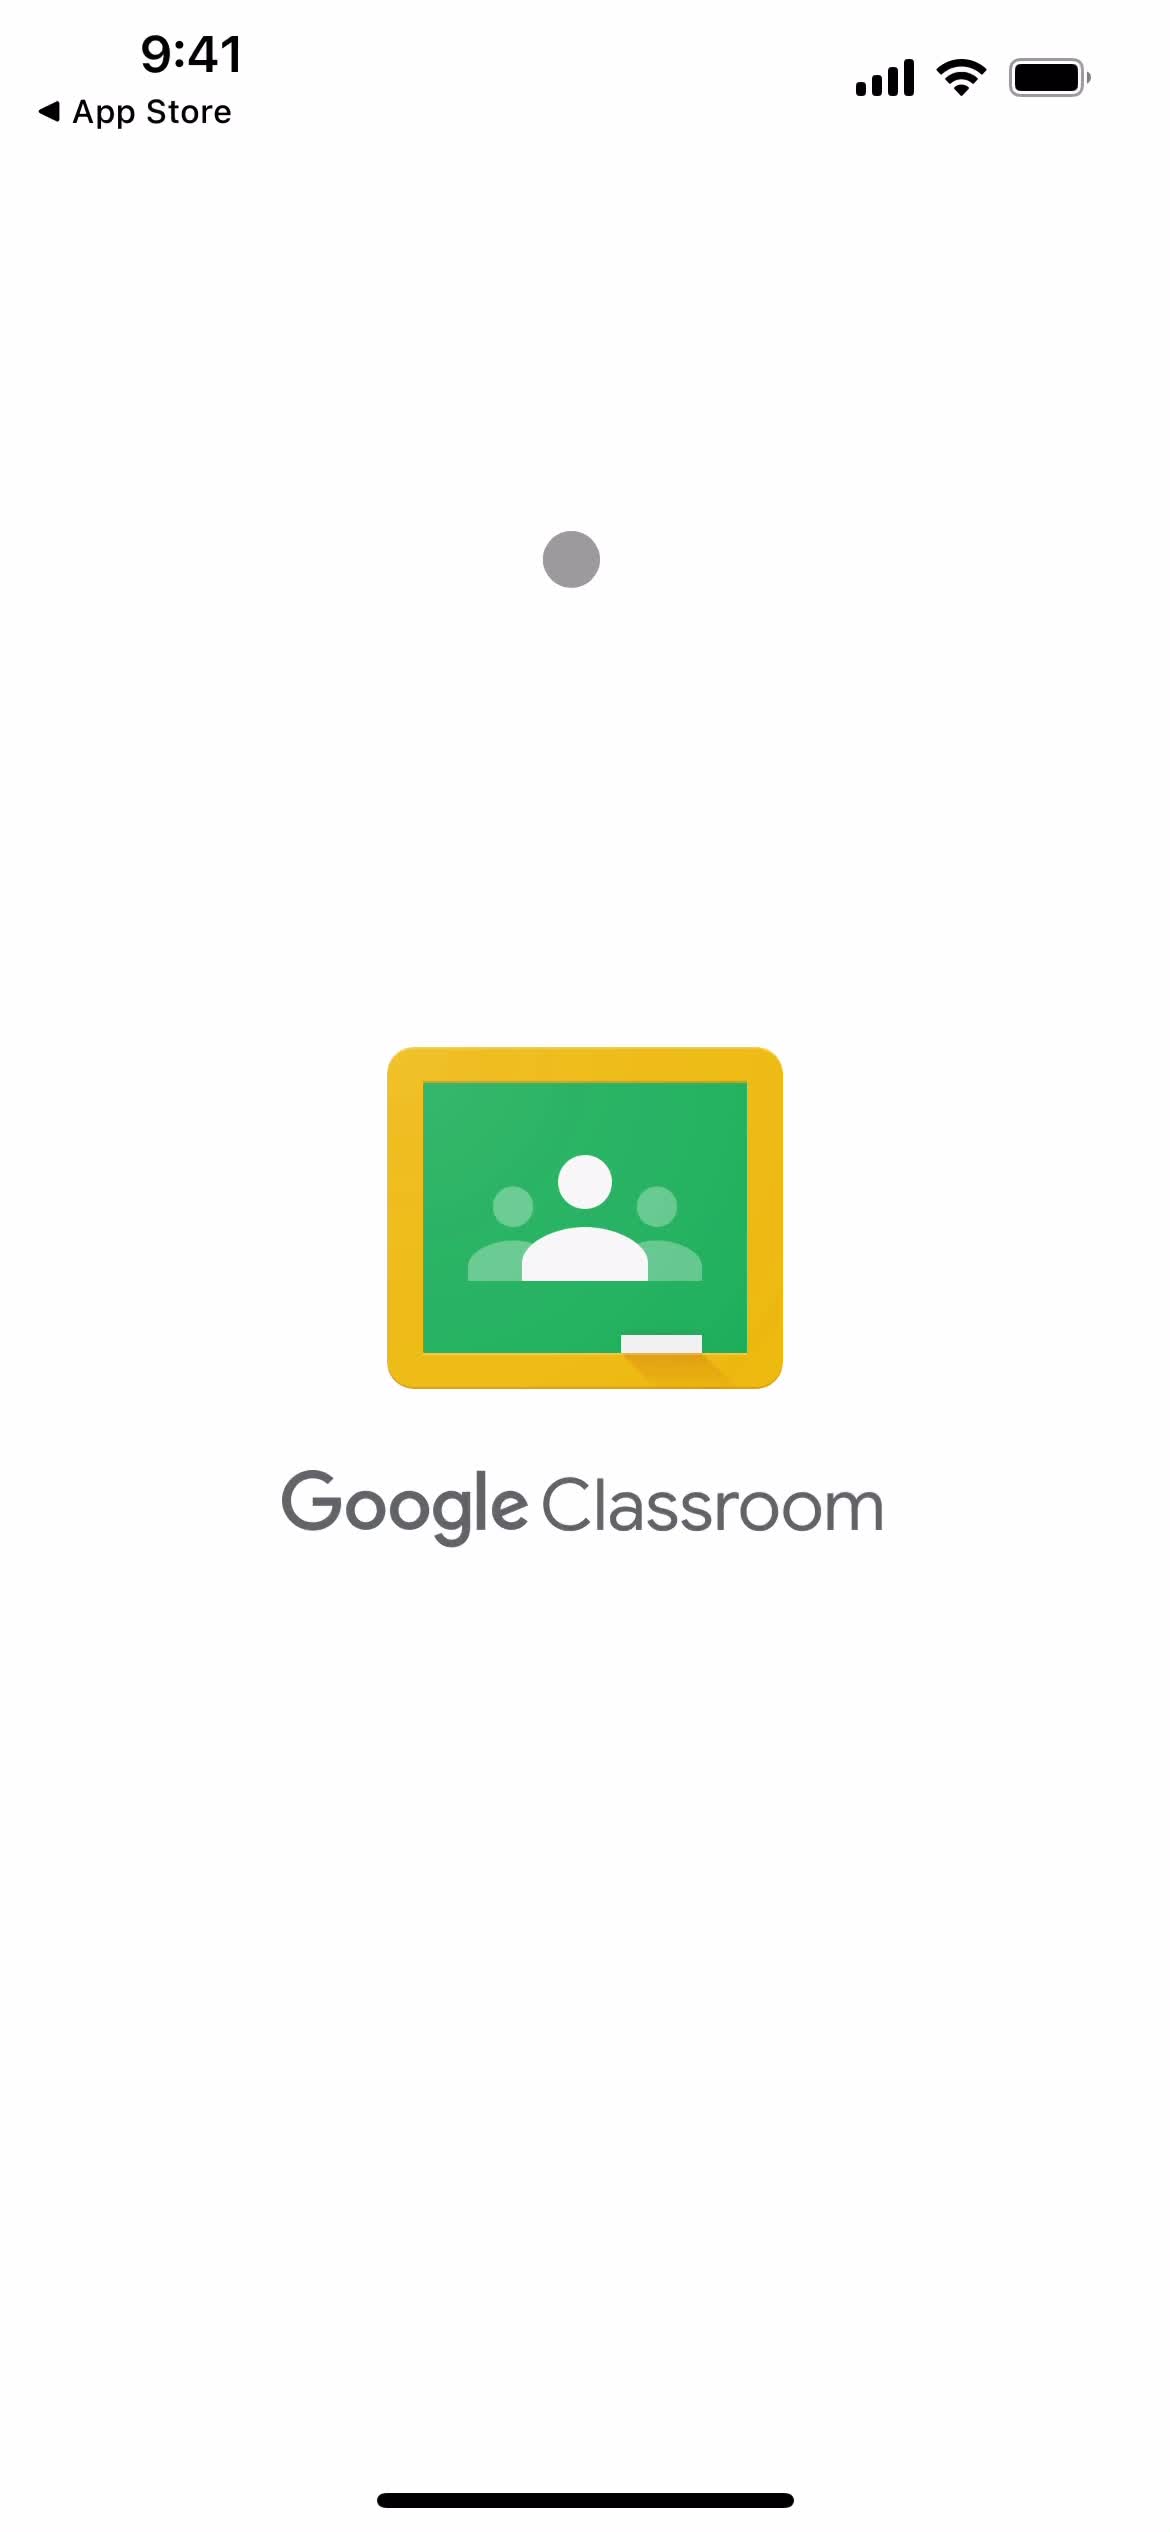 Google Classroom splash screen screenshot